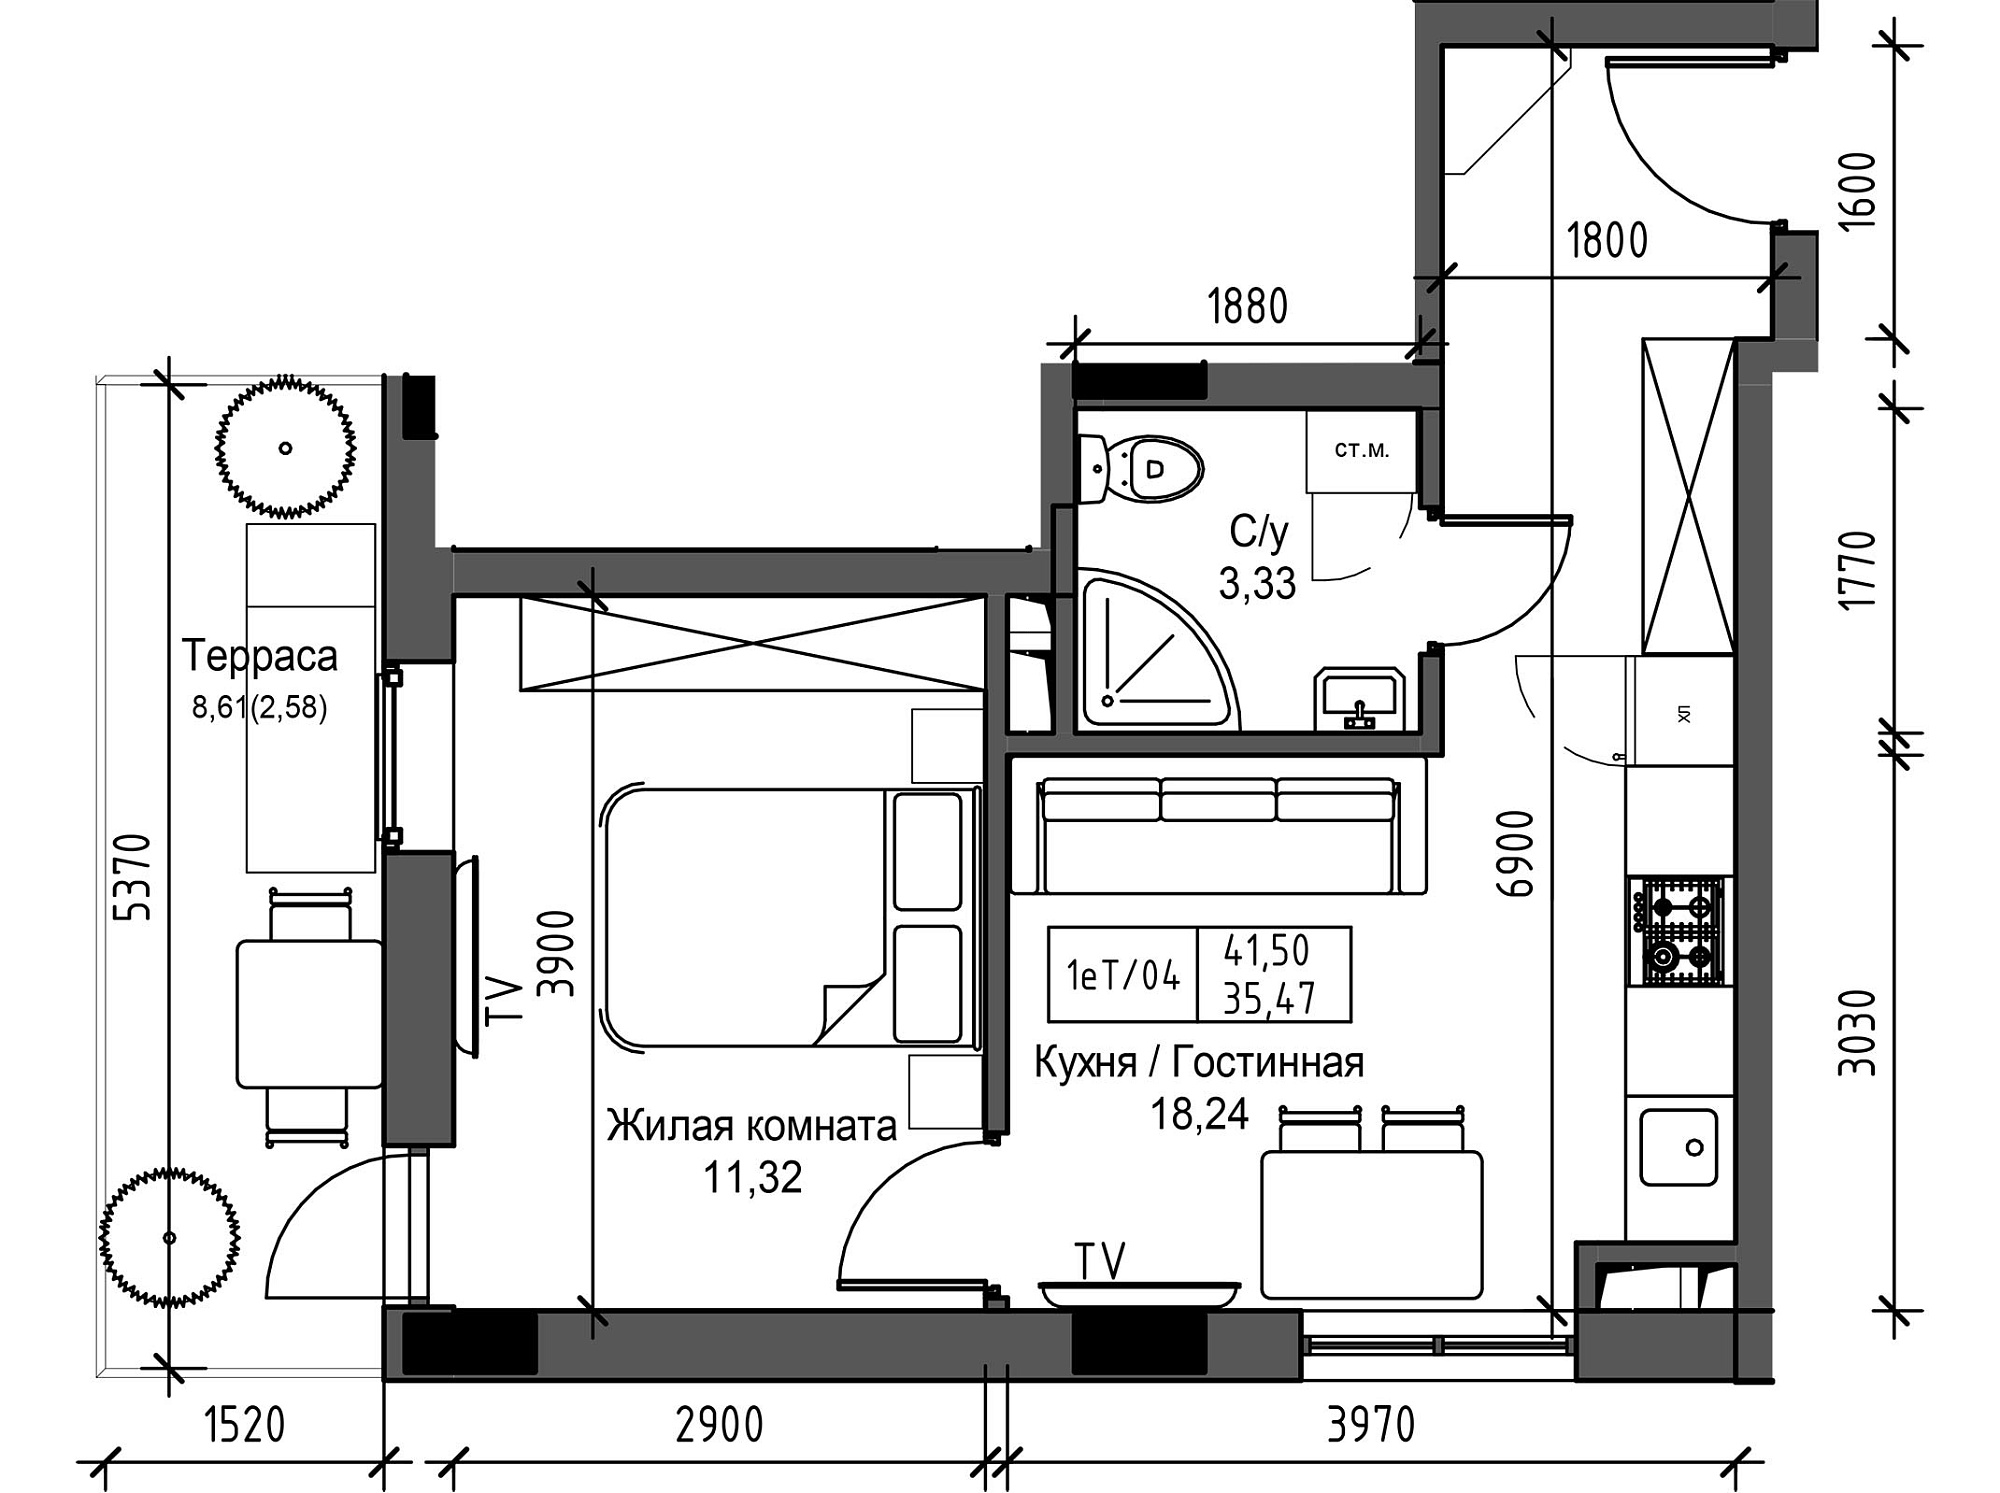 Планування 1-к квартира площею 35.47м2, UM-003-08/0085.